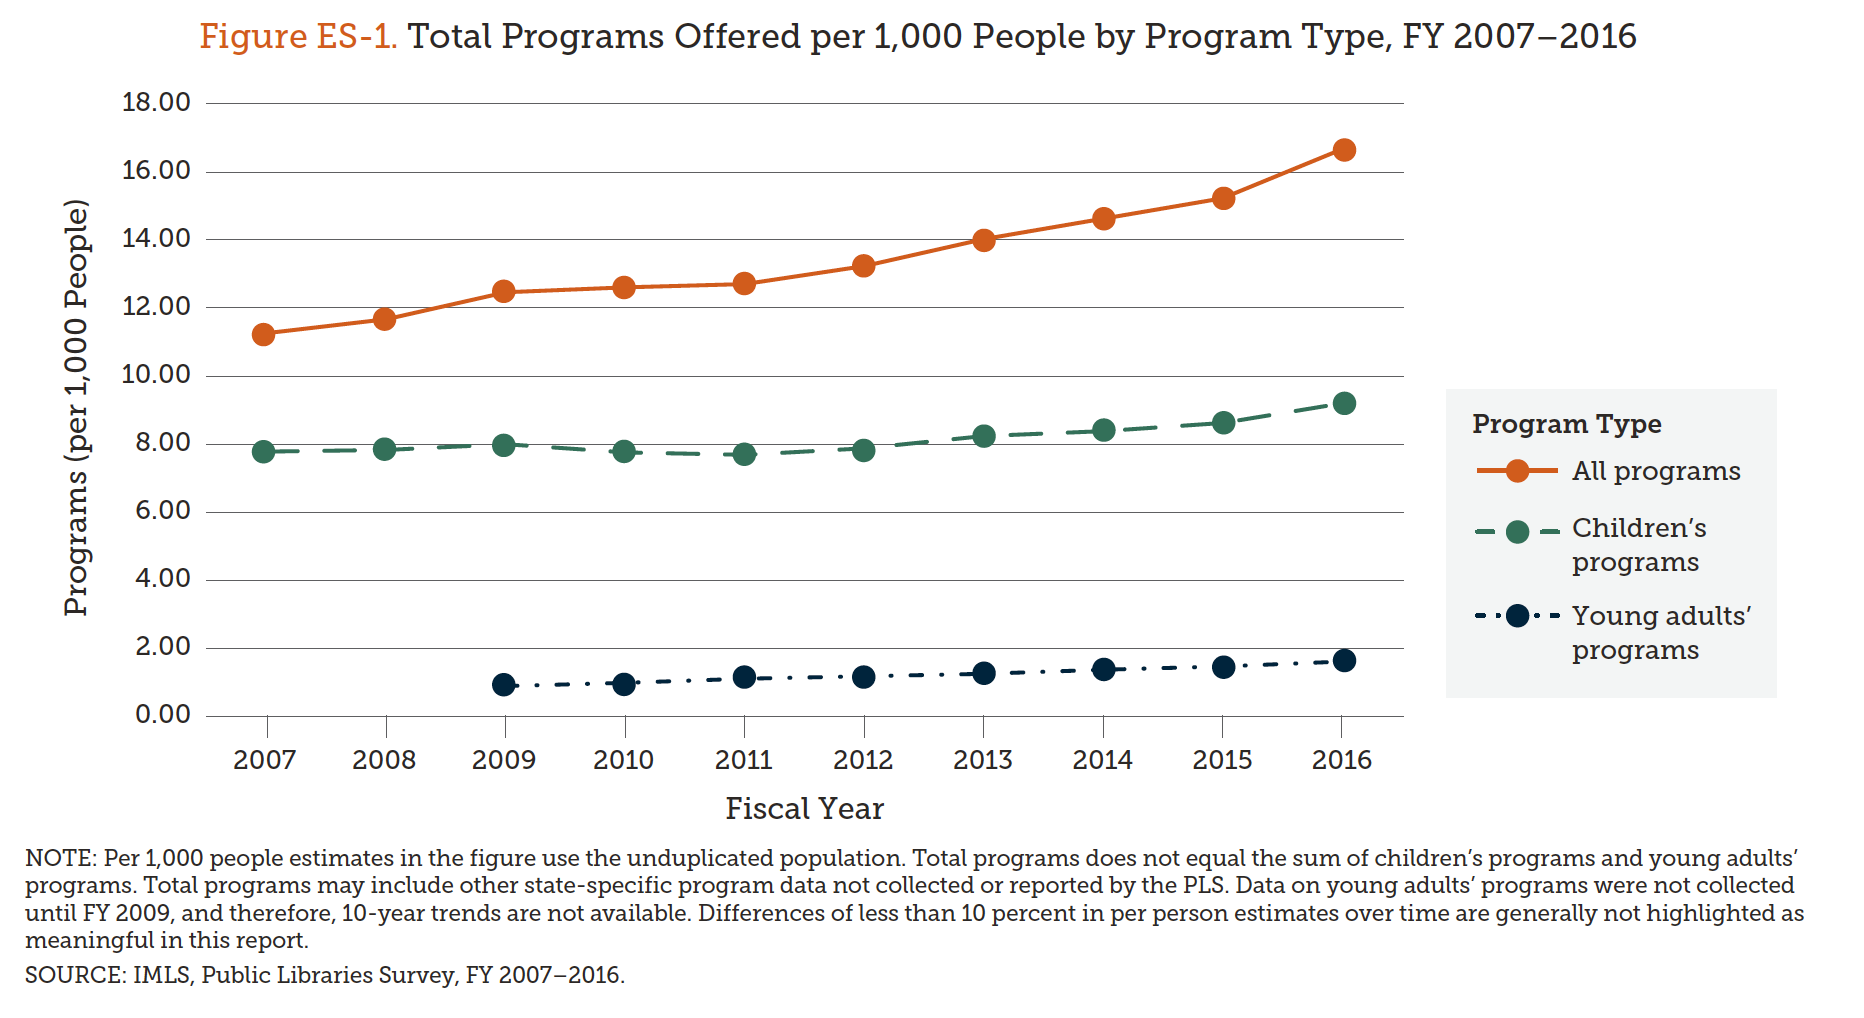 Figure ES-1. FY2007-FY2016 Total Programs Offered per 1000 People by Program Type, PLS